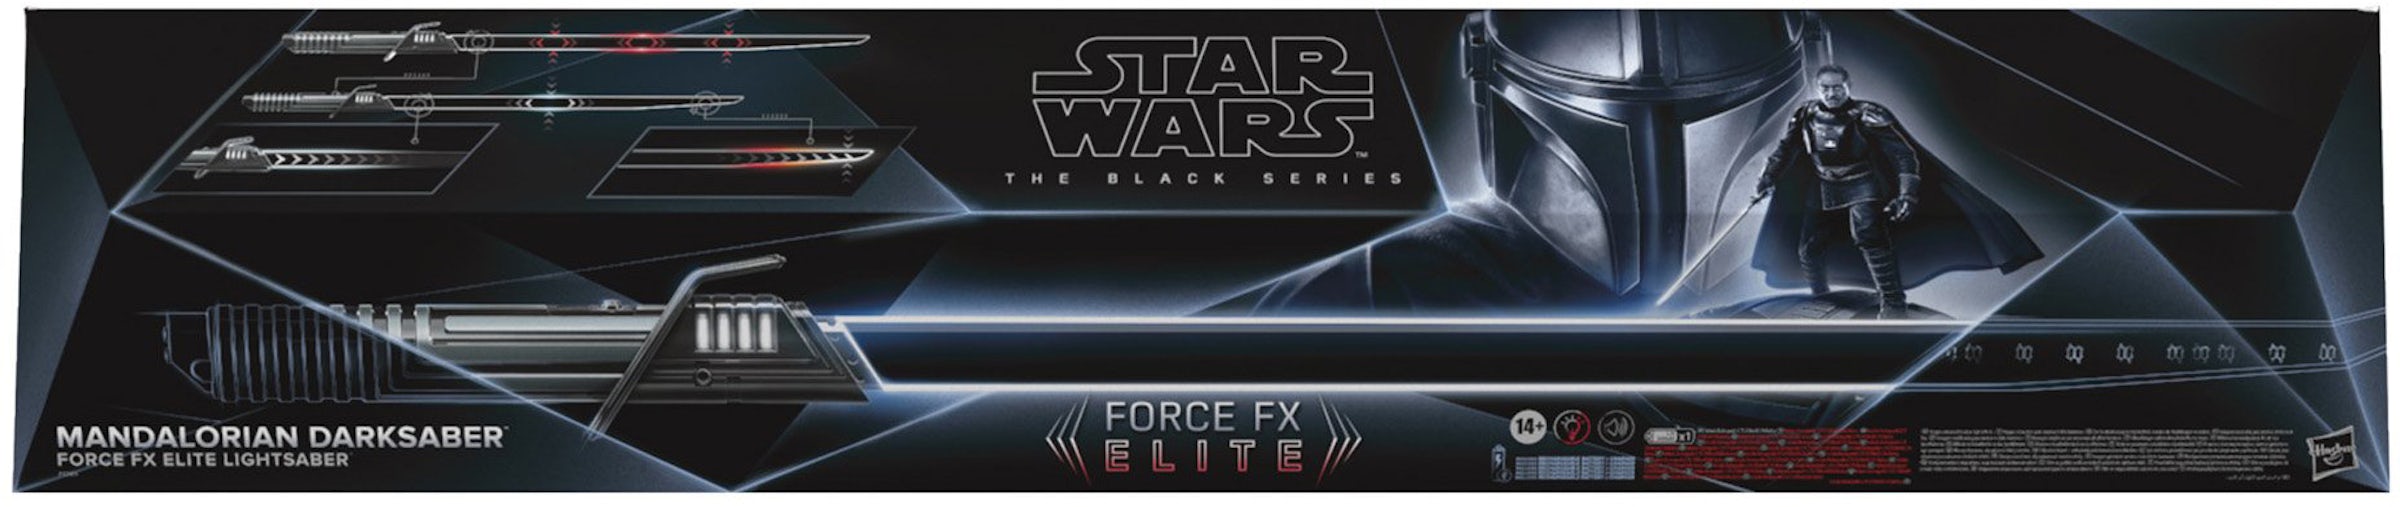 Star Wars The Black Series - Sabre de Luz Force Fx Elite - Mandalorian  Darksaber - Hasbro - superlegalbrinquedos